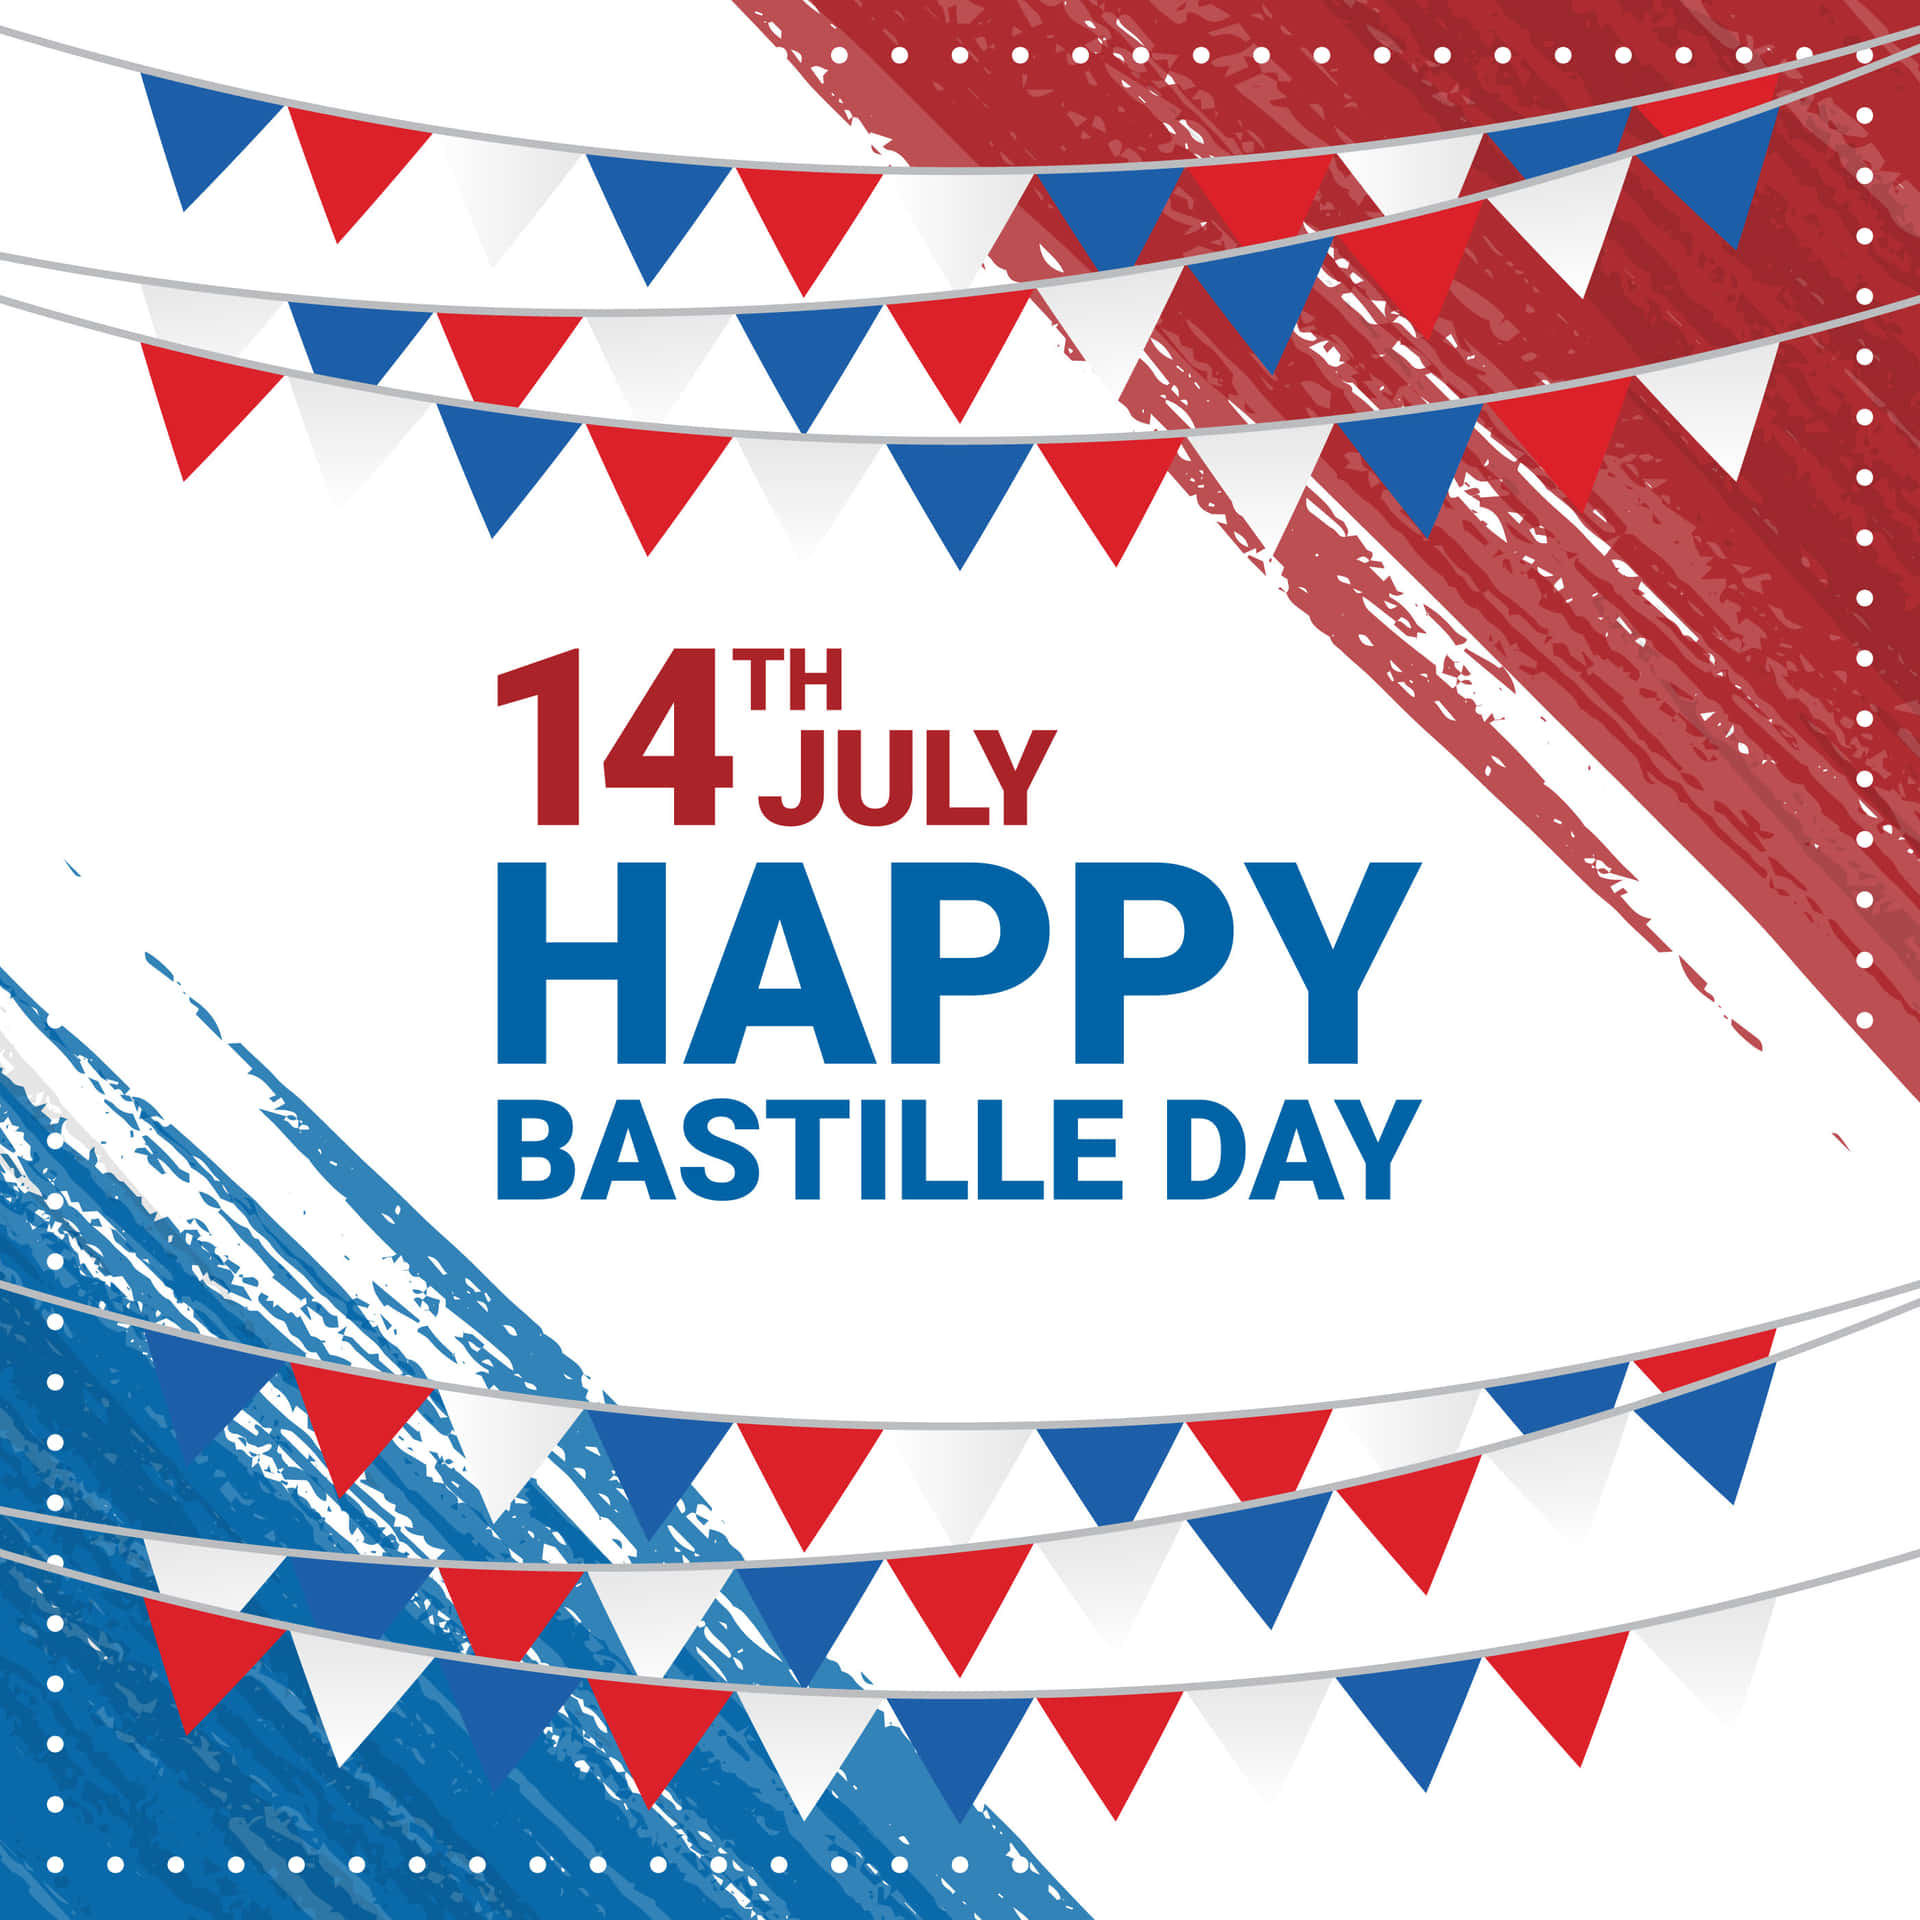 Exhilarating Celebration Of Liberty- Bastille Day In France.